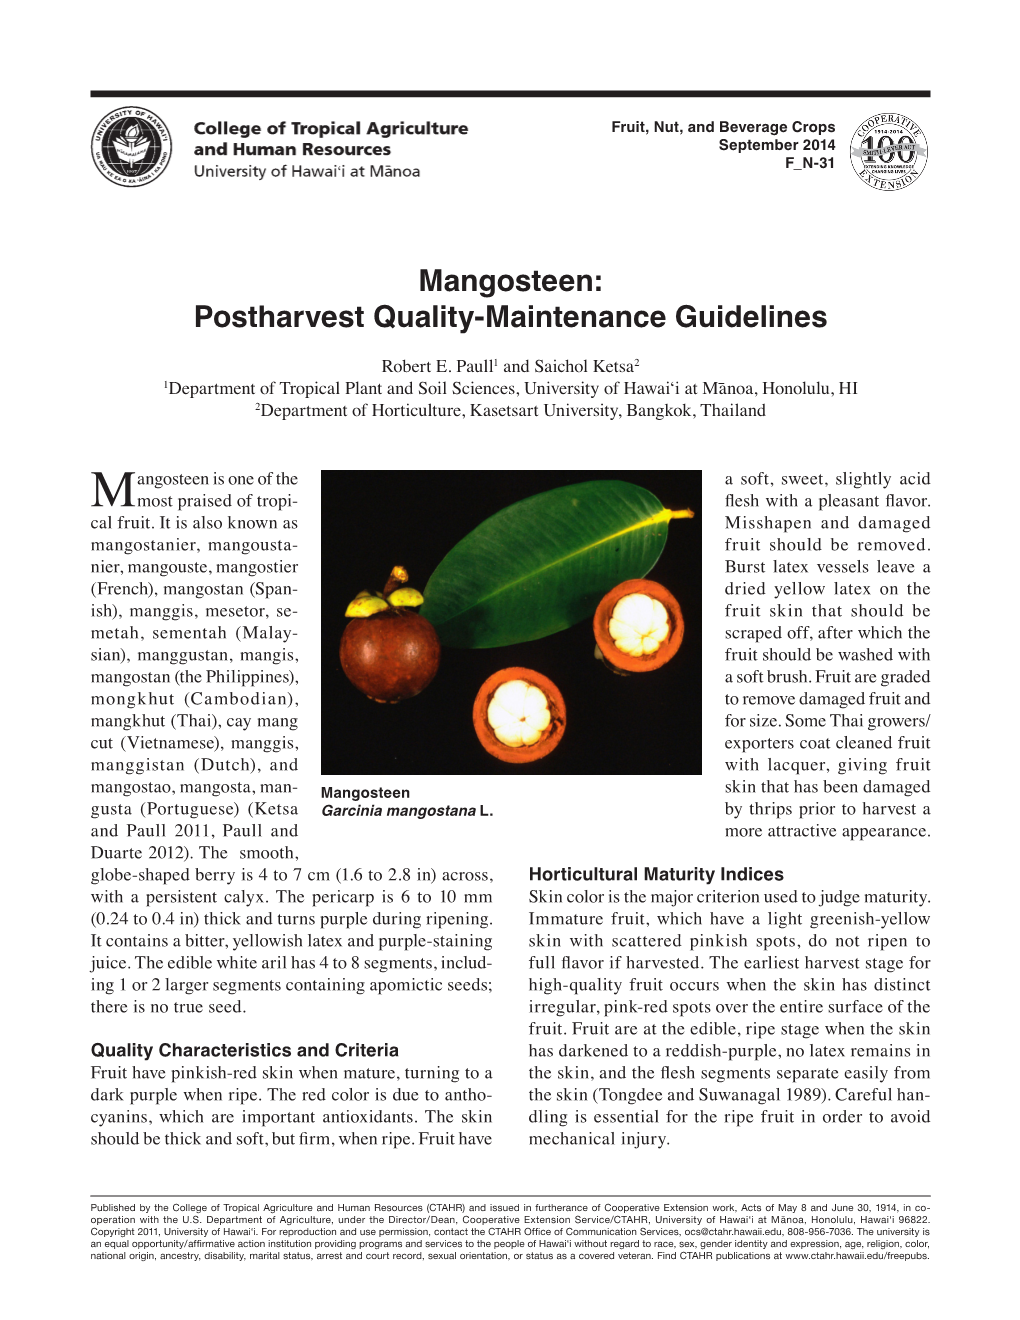 Mangosteen: Postharvest Quality-Maintenance Guidelines